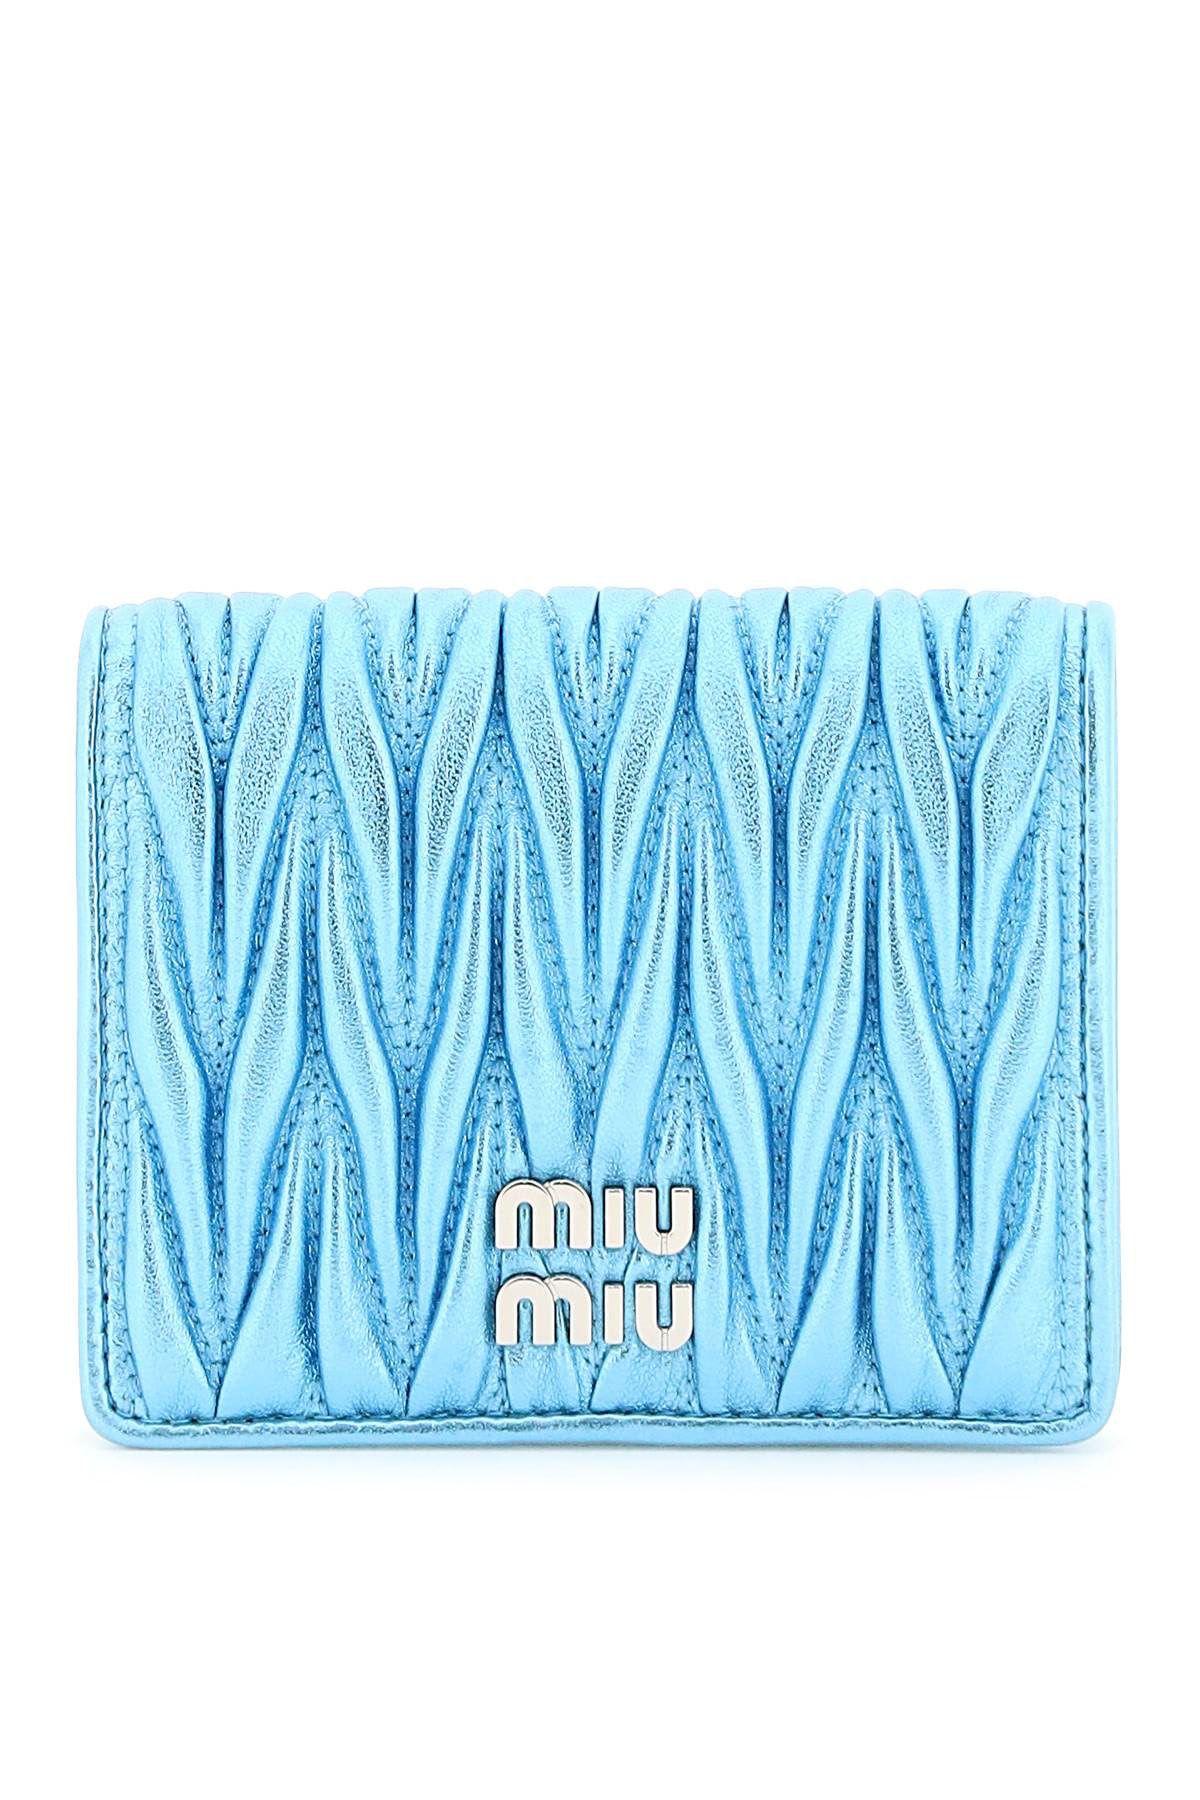 Miu Miu Matelasse Nappa Leather Small Wallet